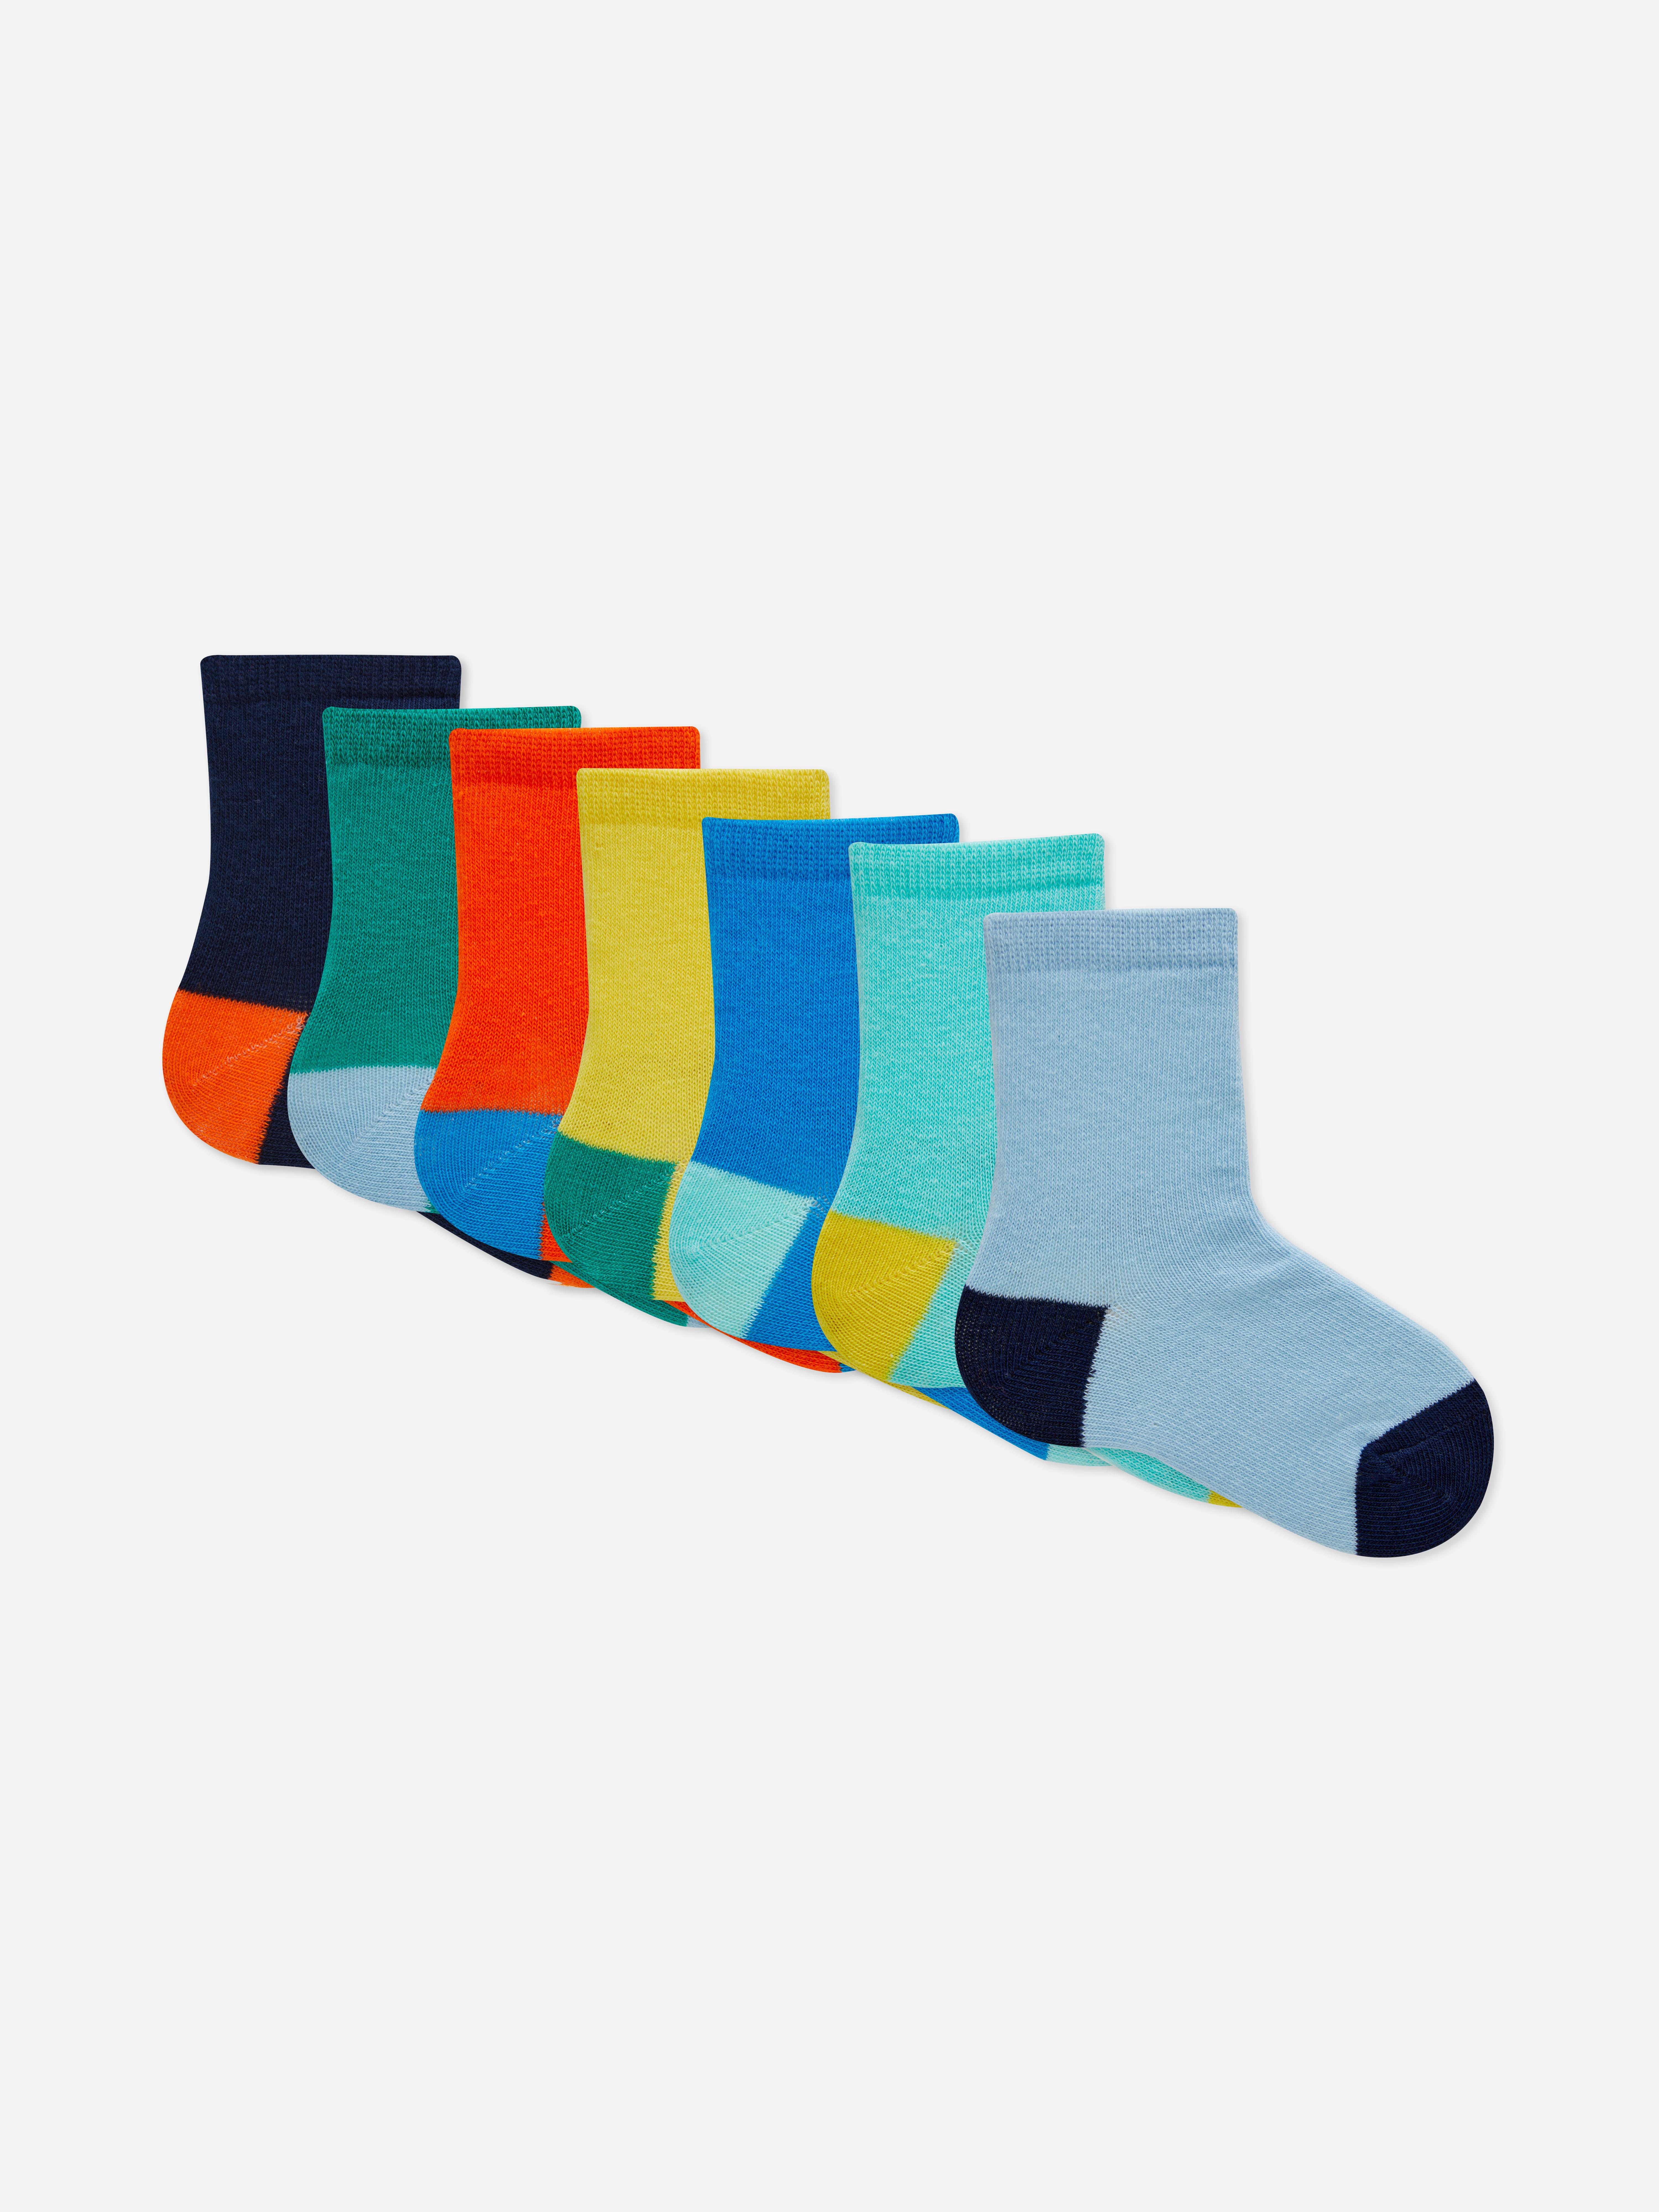 Socken aus Baumwolle in Farbblock-Optik, 7er-Pack